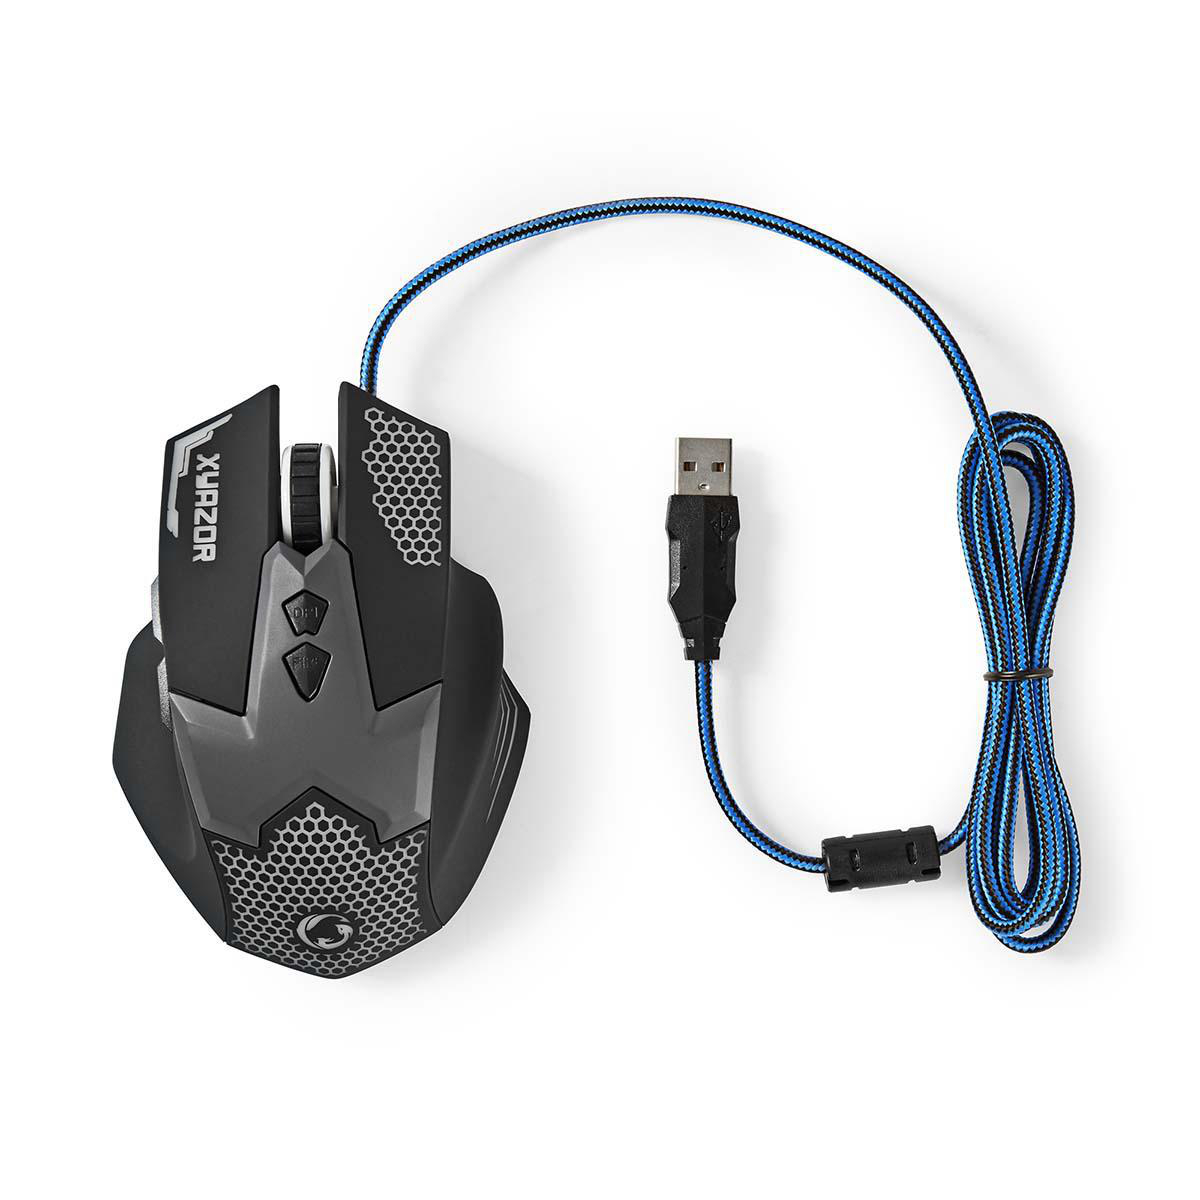 Nedis GMWD200BK Gaming Mouse Rechtshändig | 1.50 m | LED Verdrahtet | 800 / 1200 / 1600 / 2400 dpi | Einstellbar DPI 